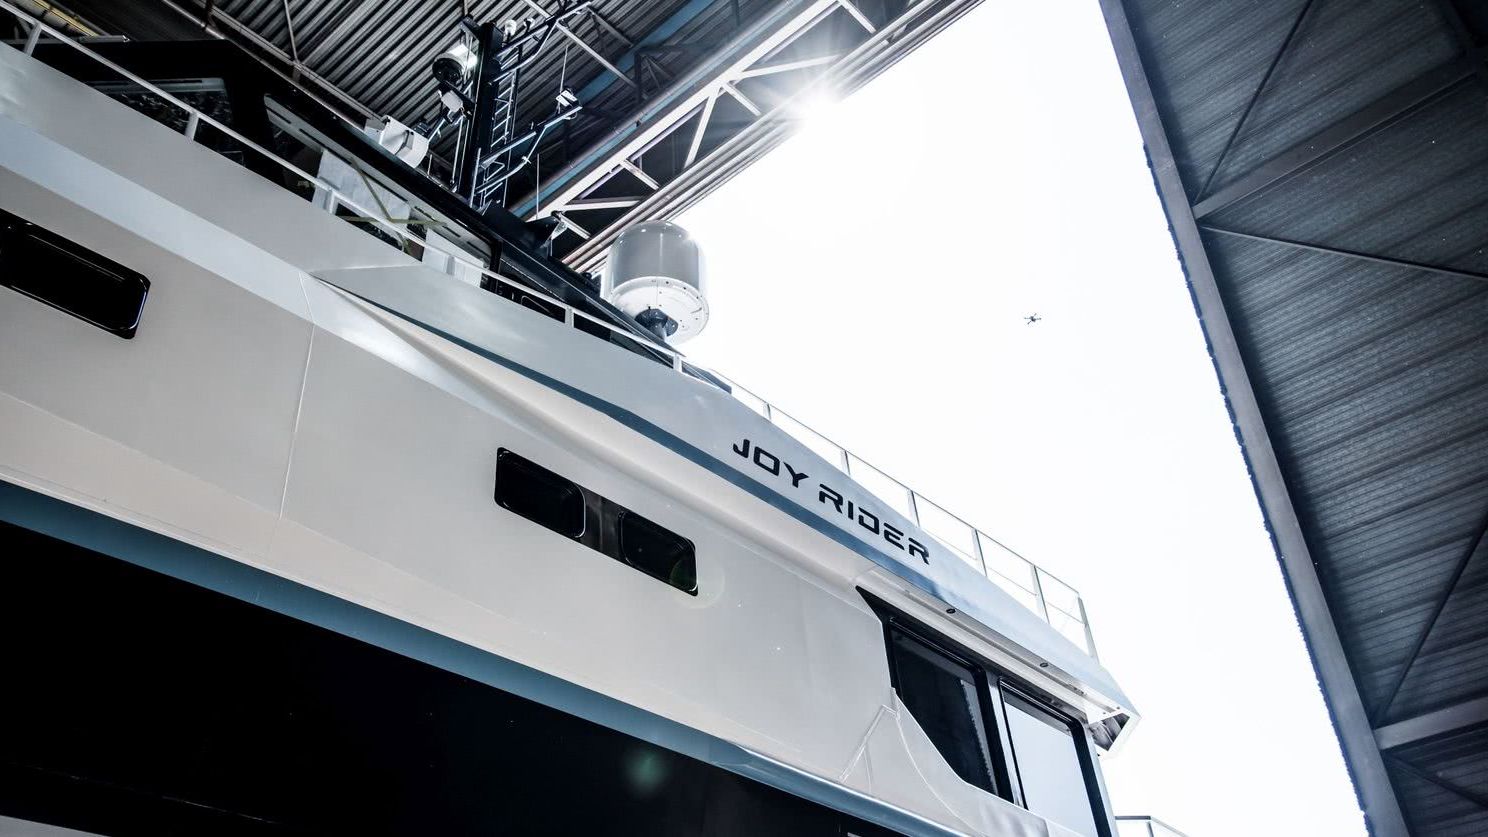 Joy Rider Yacht Support Vessel Damen Shipyard